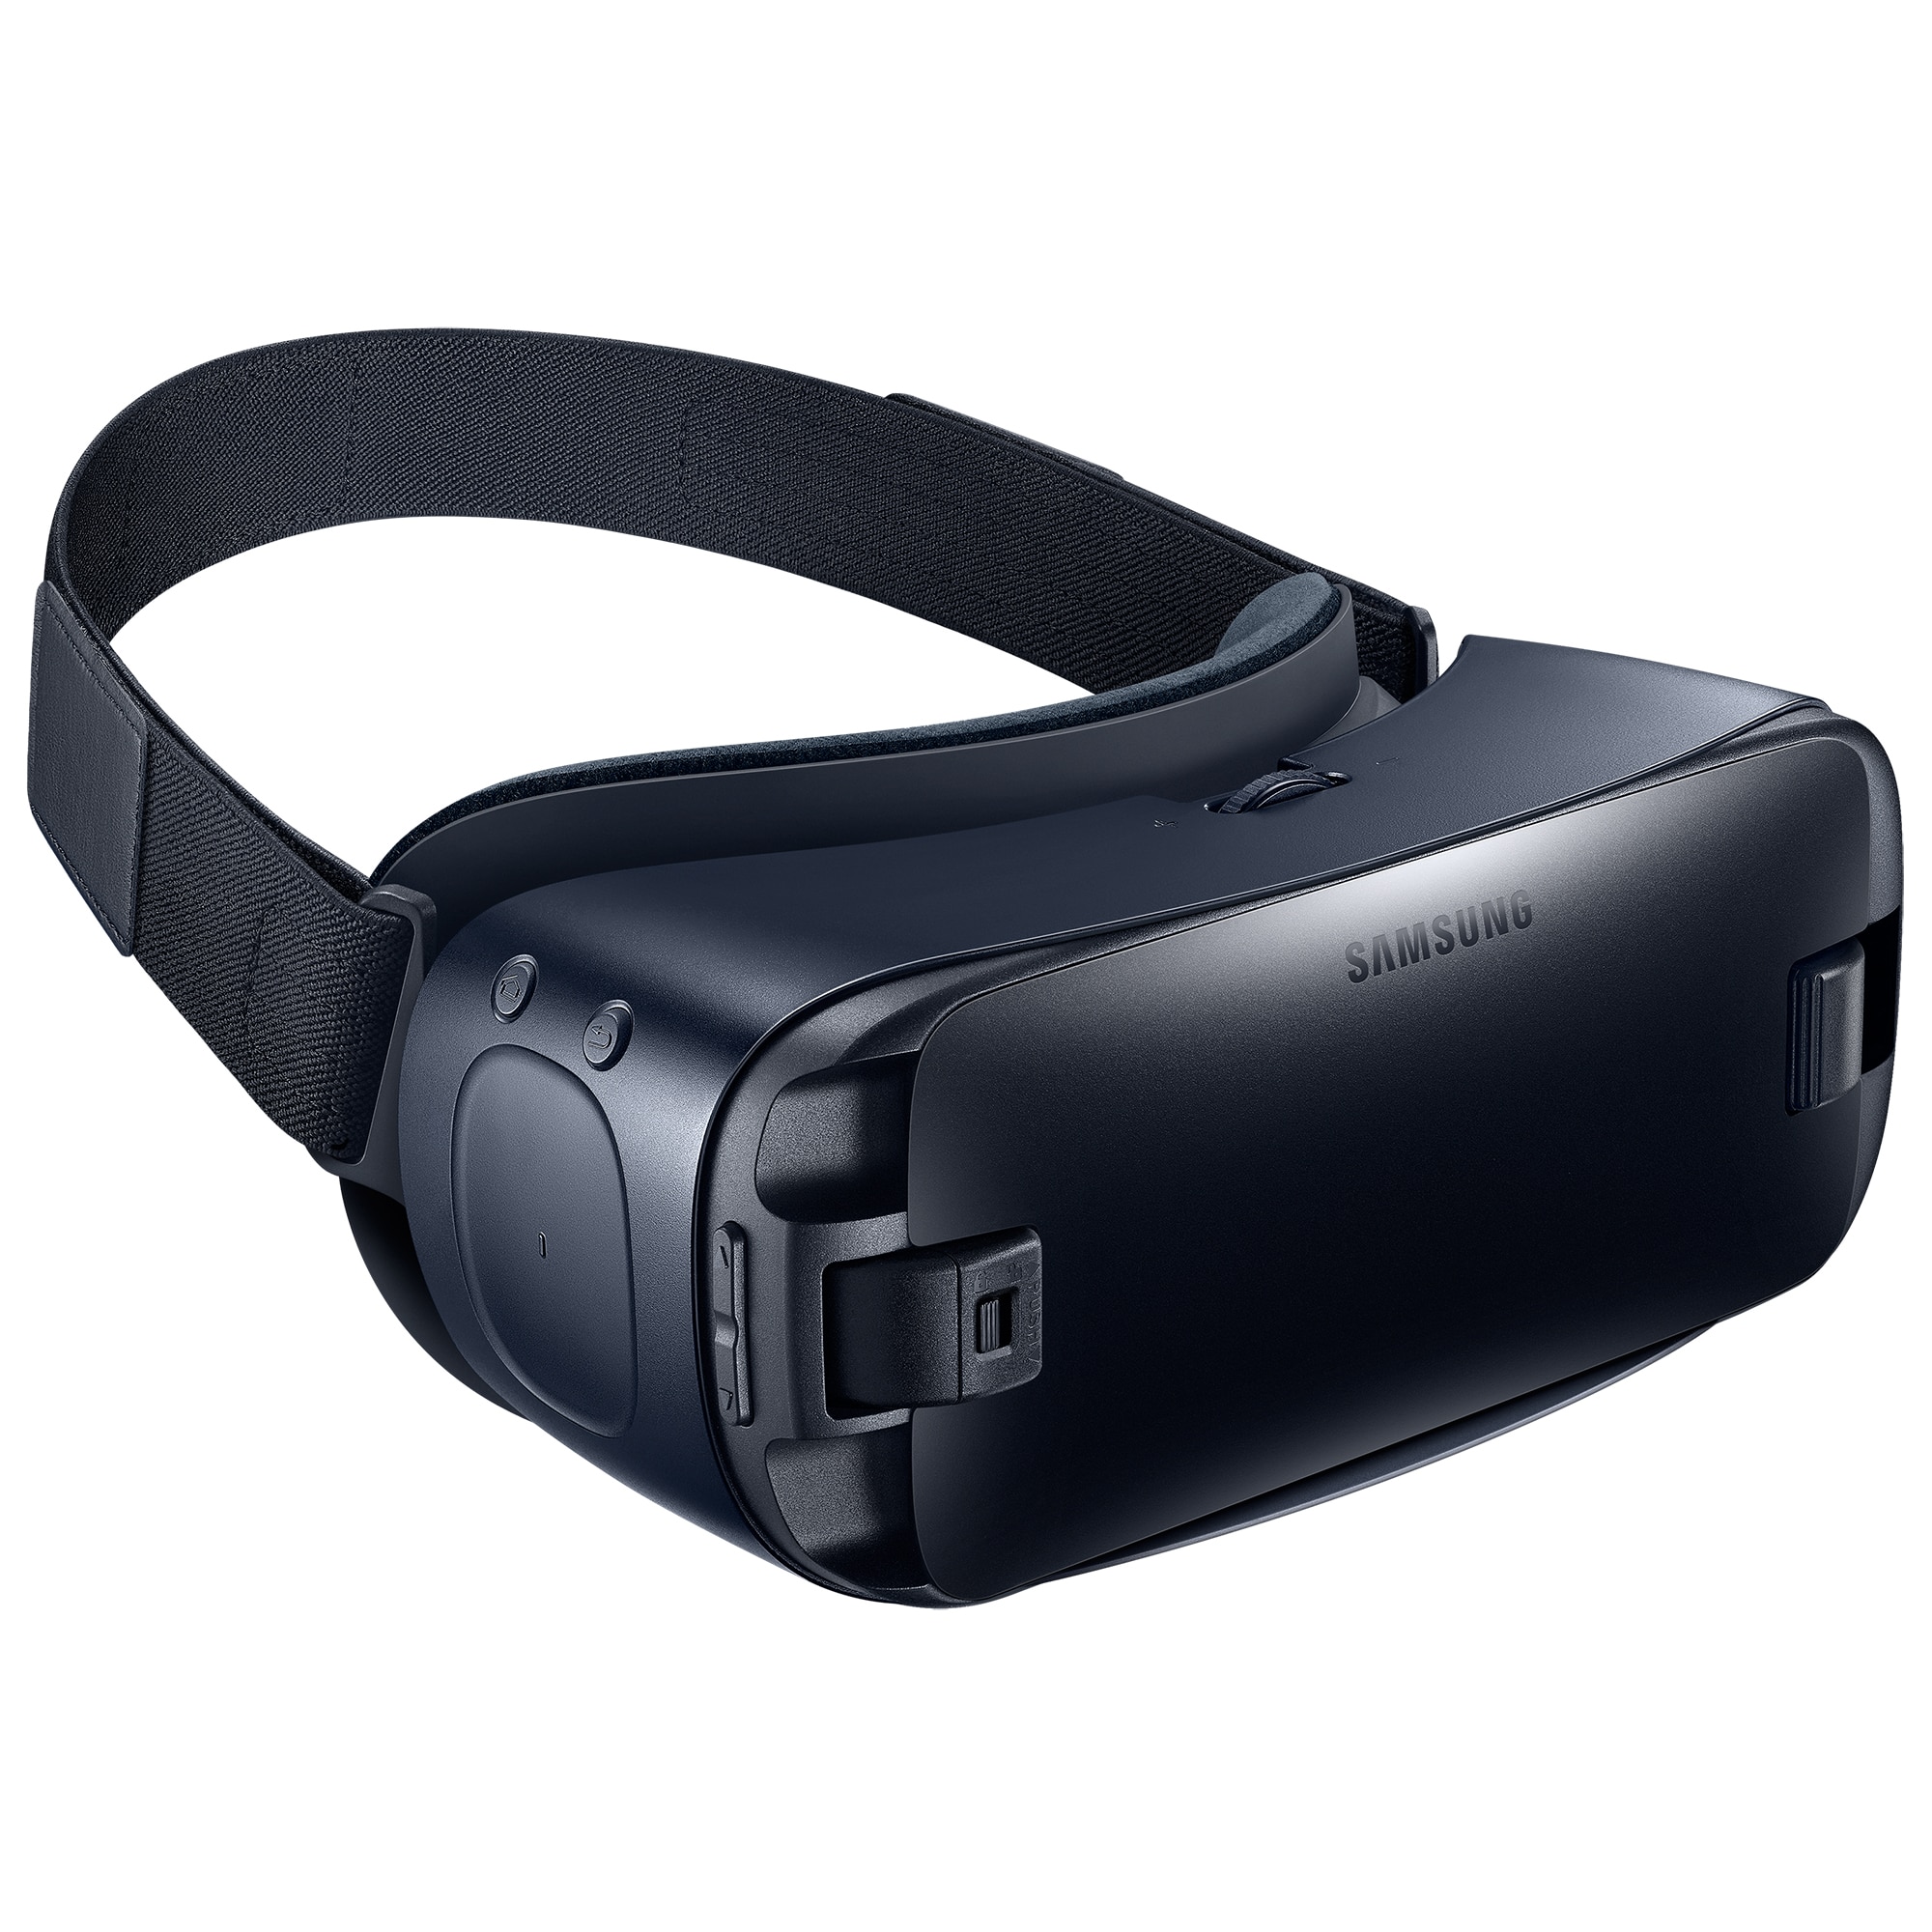 Д очки для телефона. Очки виртуальной реальности самсунг Gear VR. Samsung VR 325. Виар очки самсунг. Gear VR 323.